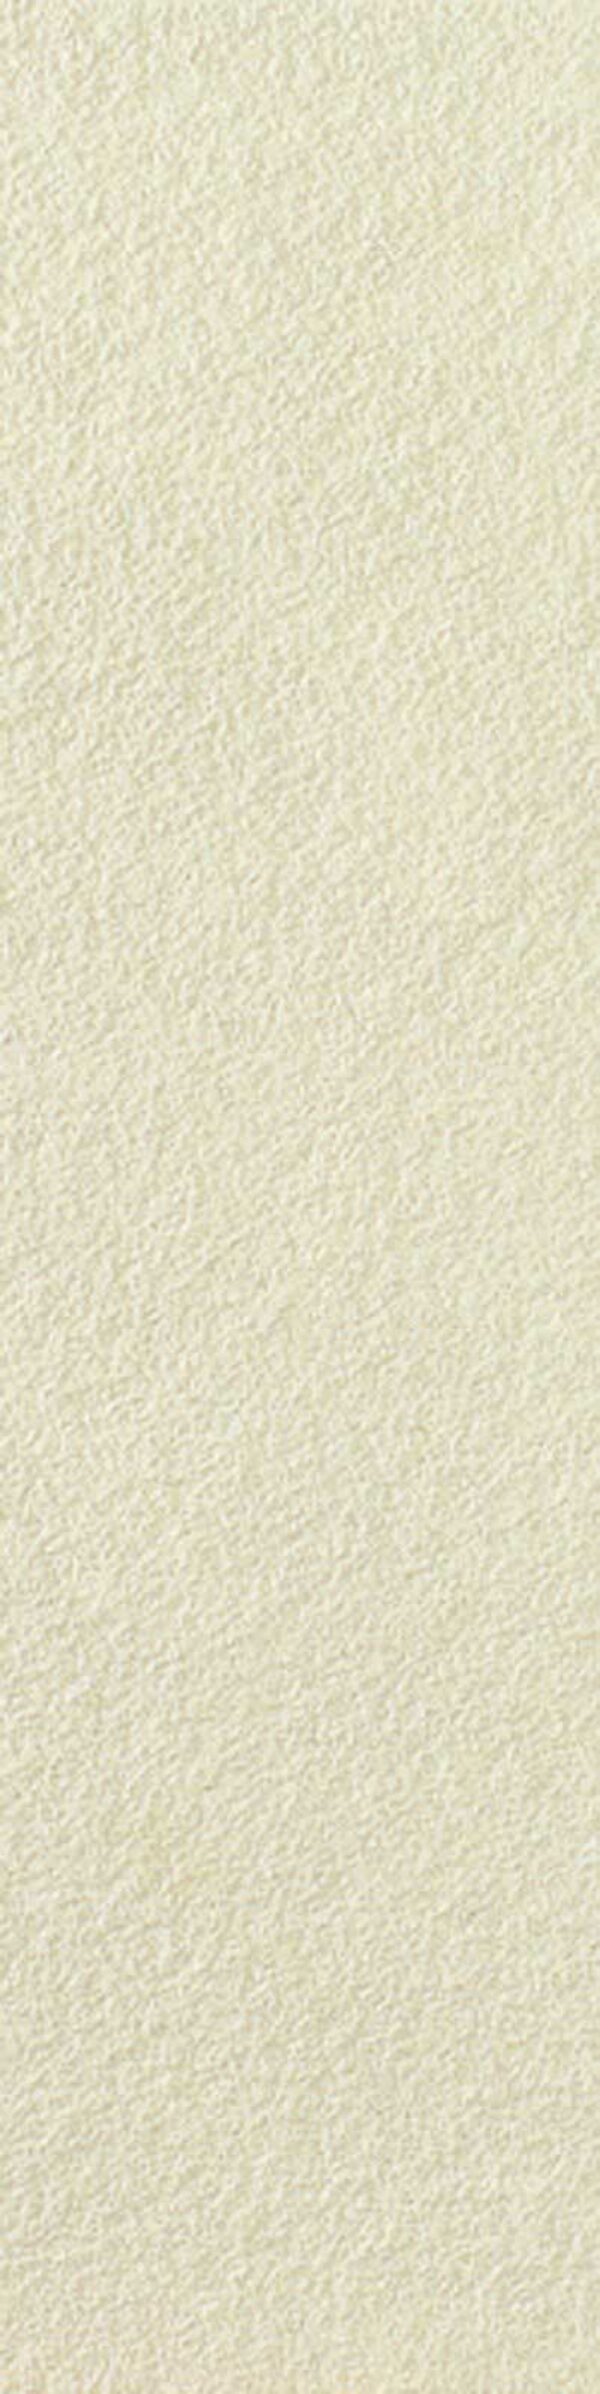 Gresie spatii publice Marazzi Neutro Bianco Bocciardato 15x60 cm Rectificata M84K